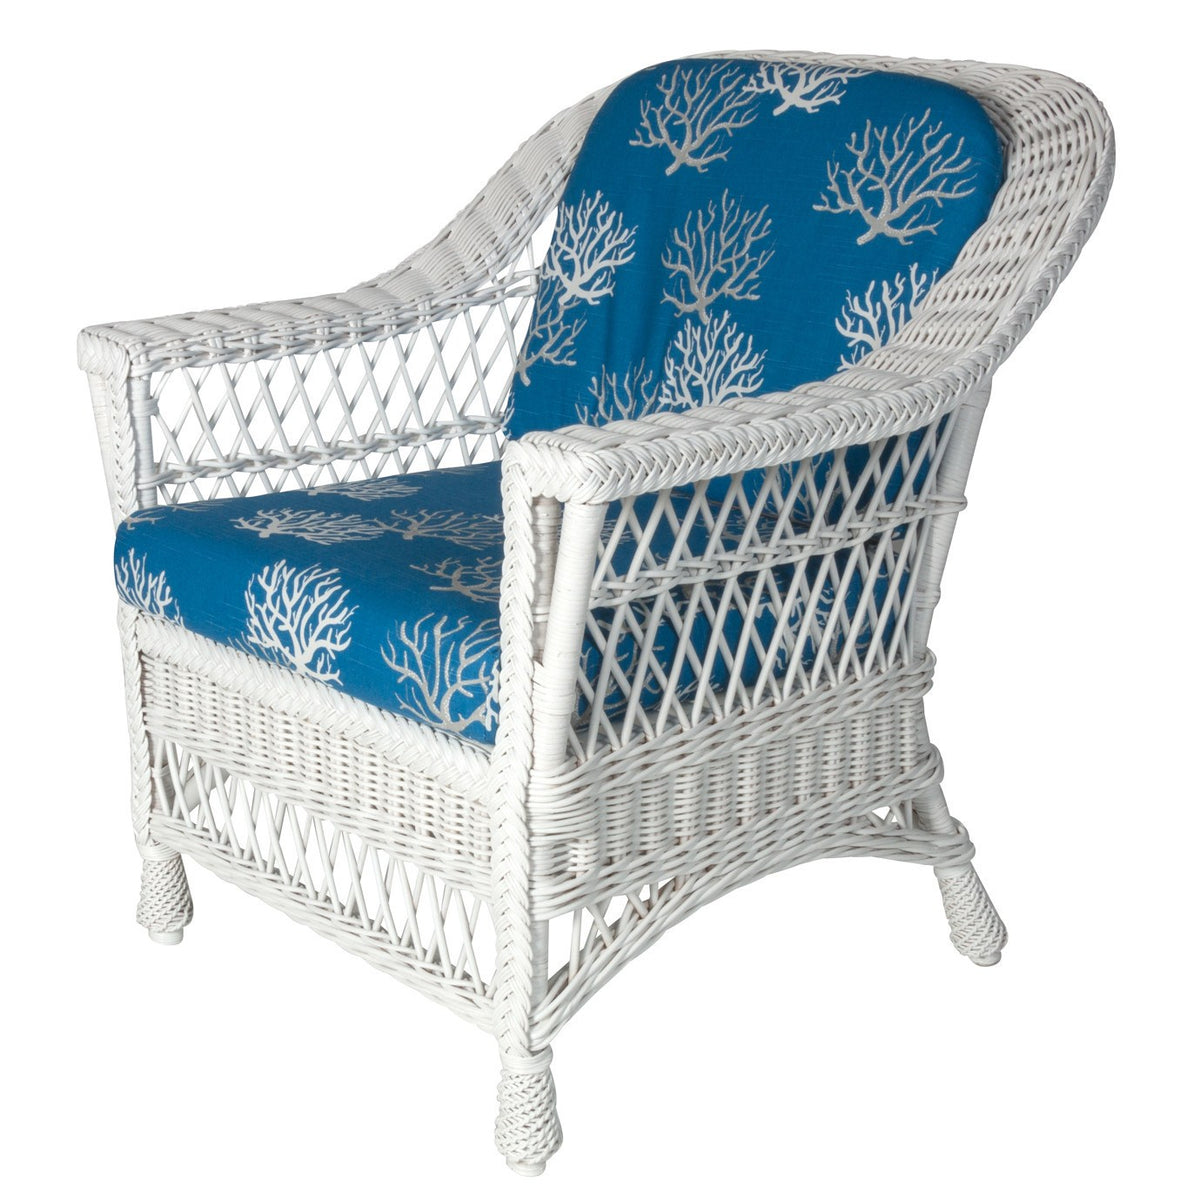 Designer Wicker &amp; Rattan By Tribor Harbor front Arm Chair by Designer Wicker from Tribor Chair - Rattan Imports